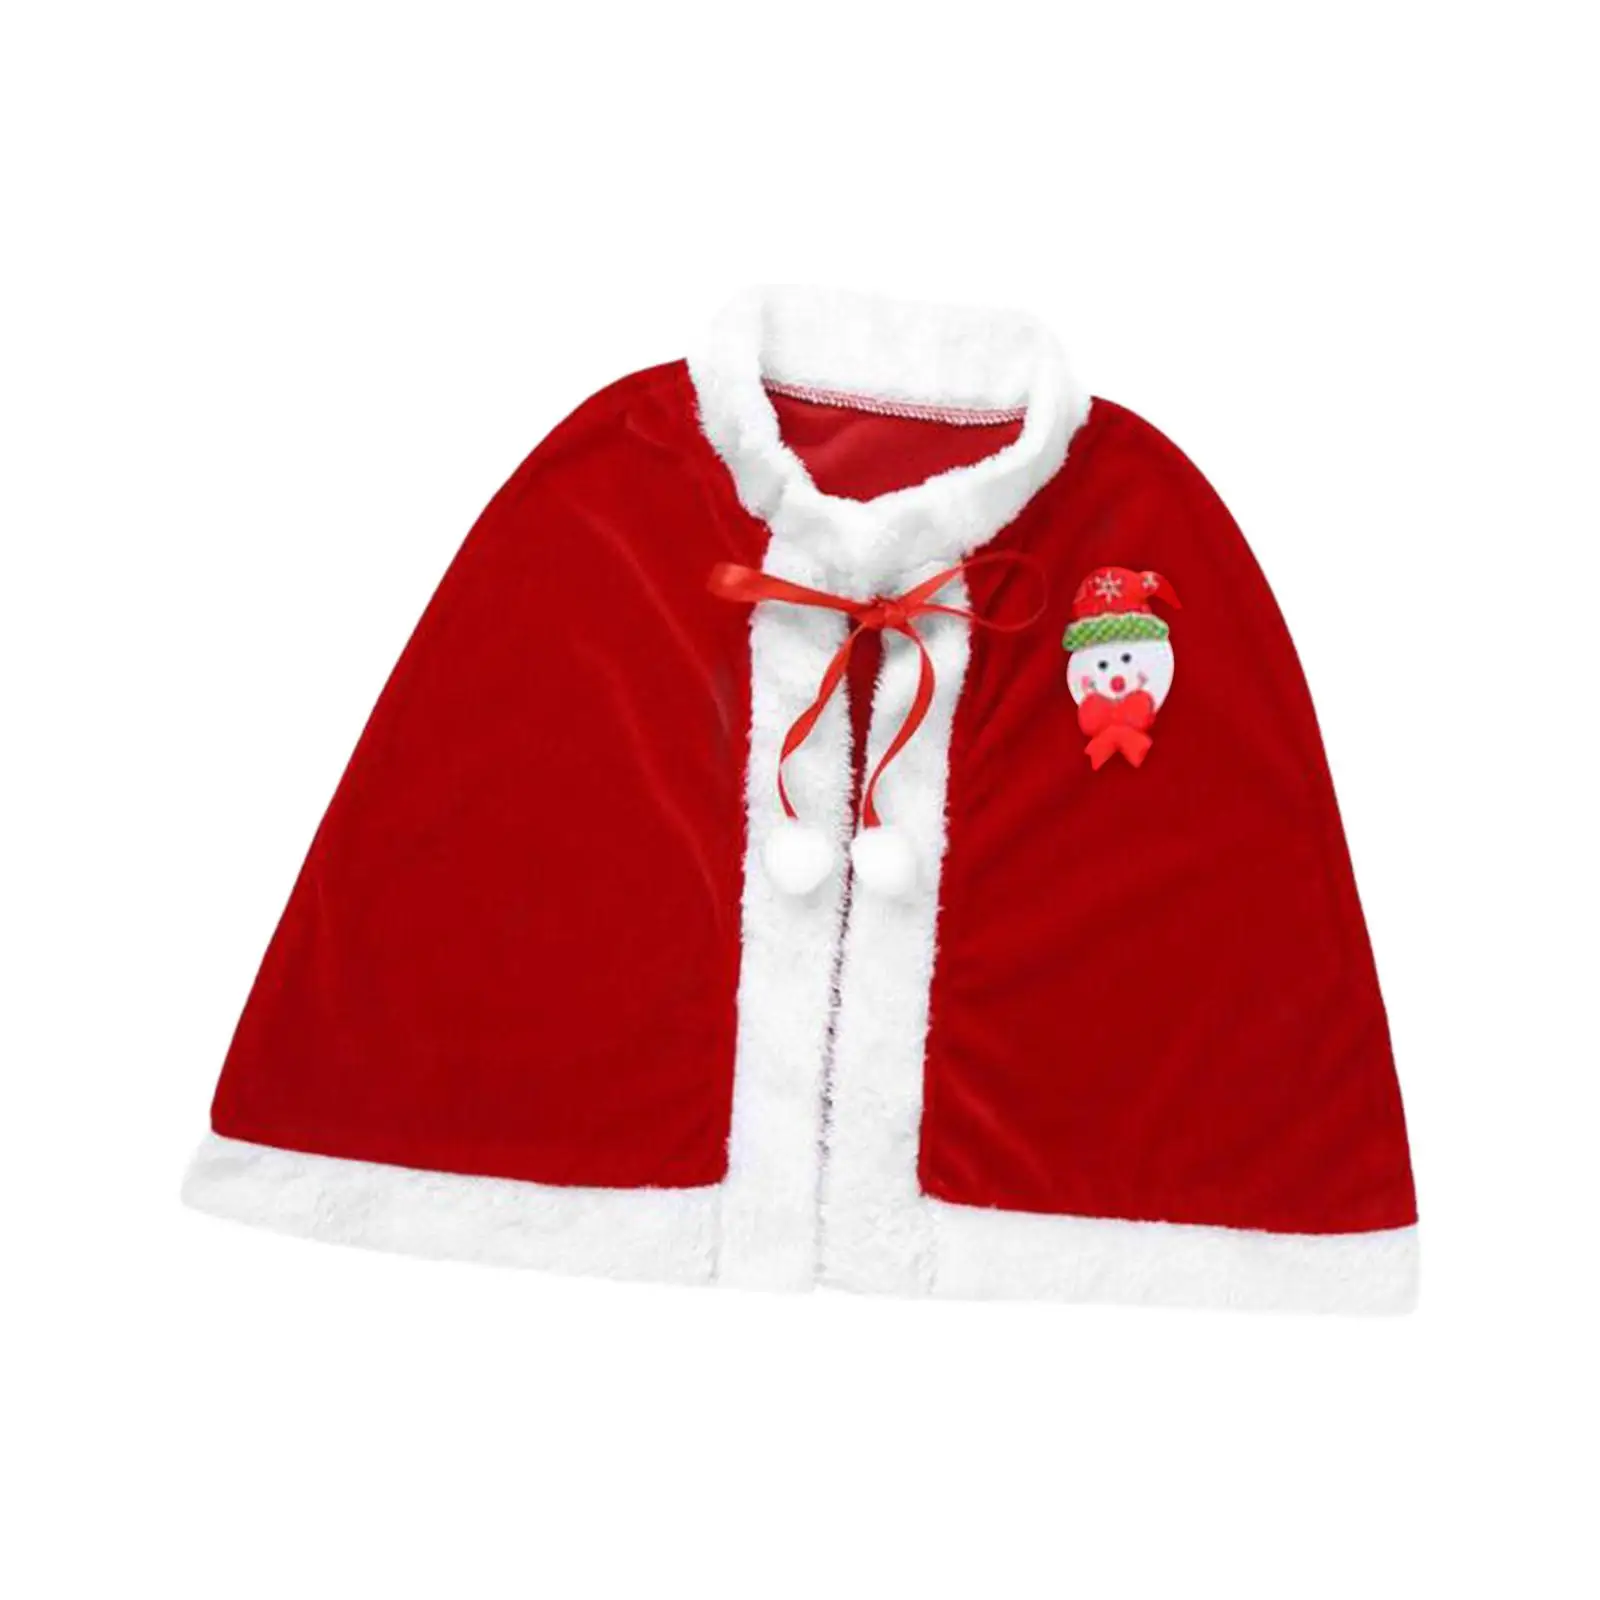 Kids Christmas Costume Cloak Xmas Shawl Cloak for Props Winter Dressing up